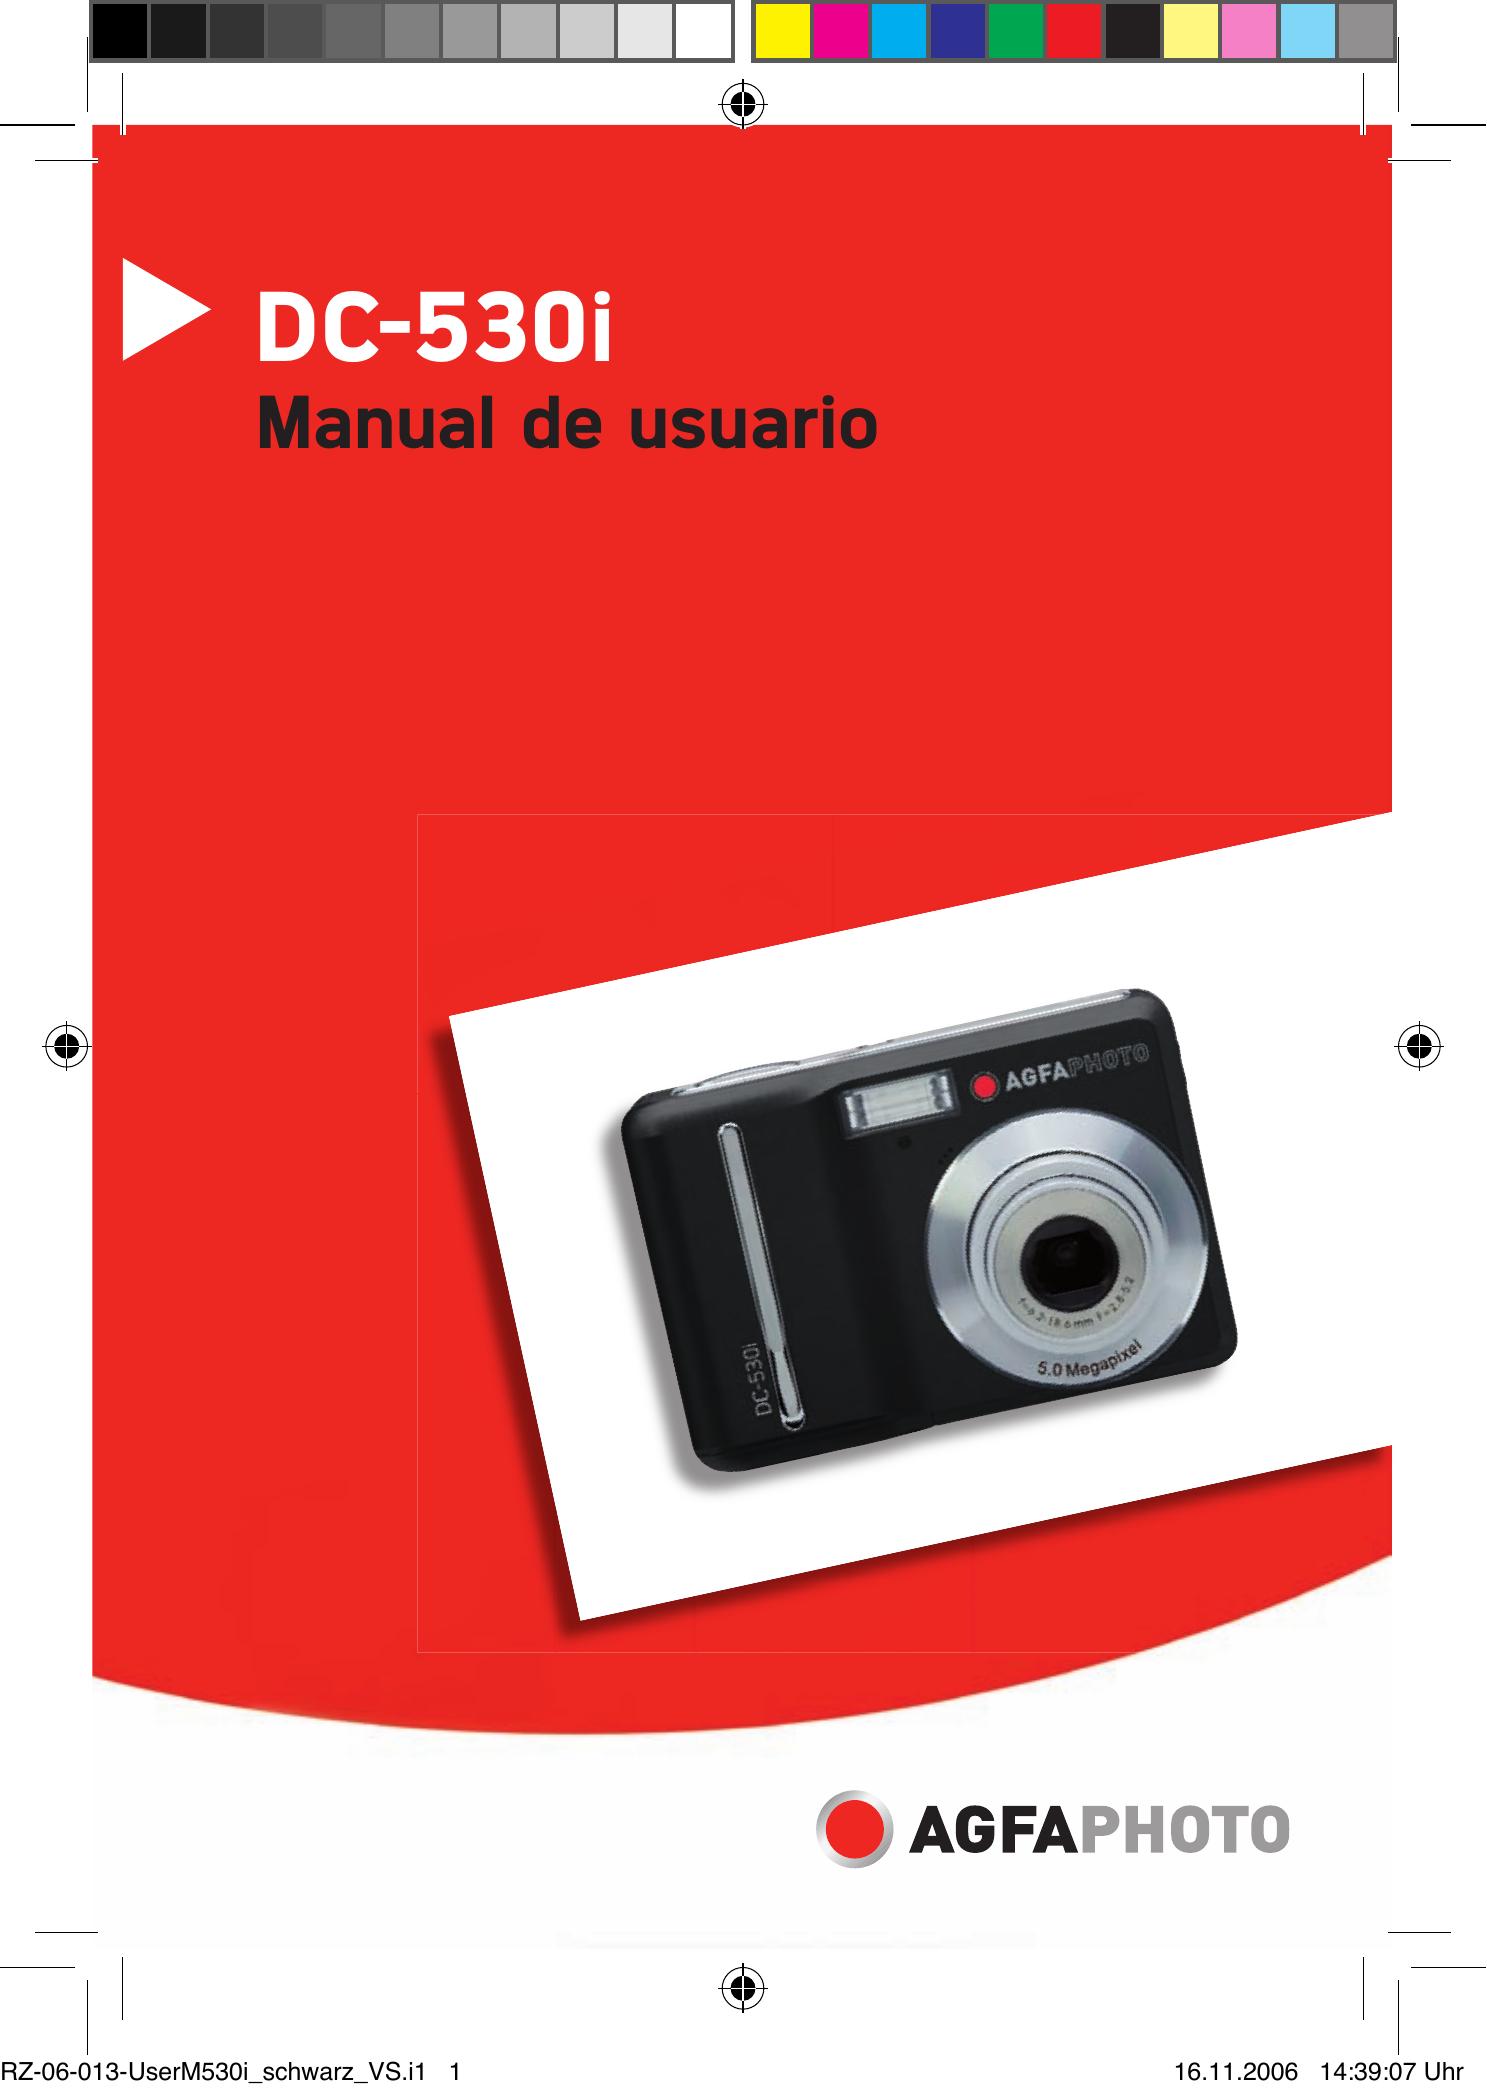 AGFA DC-530i Digital Camera User Manual (Page 1)